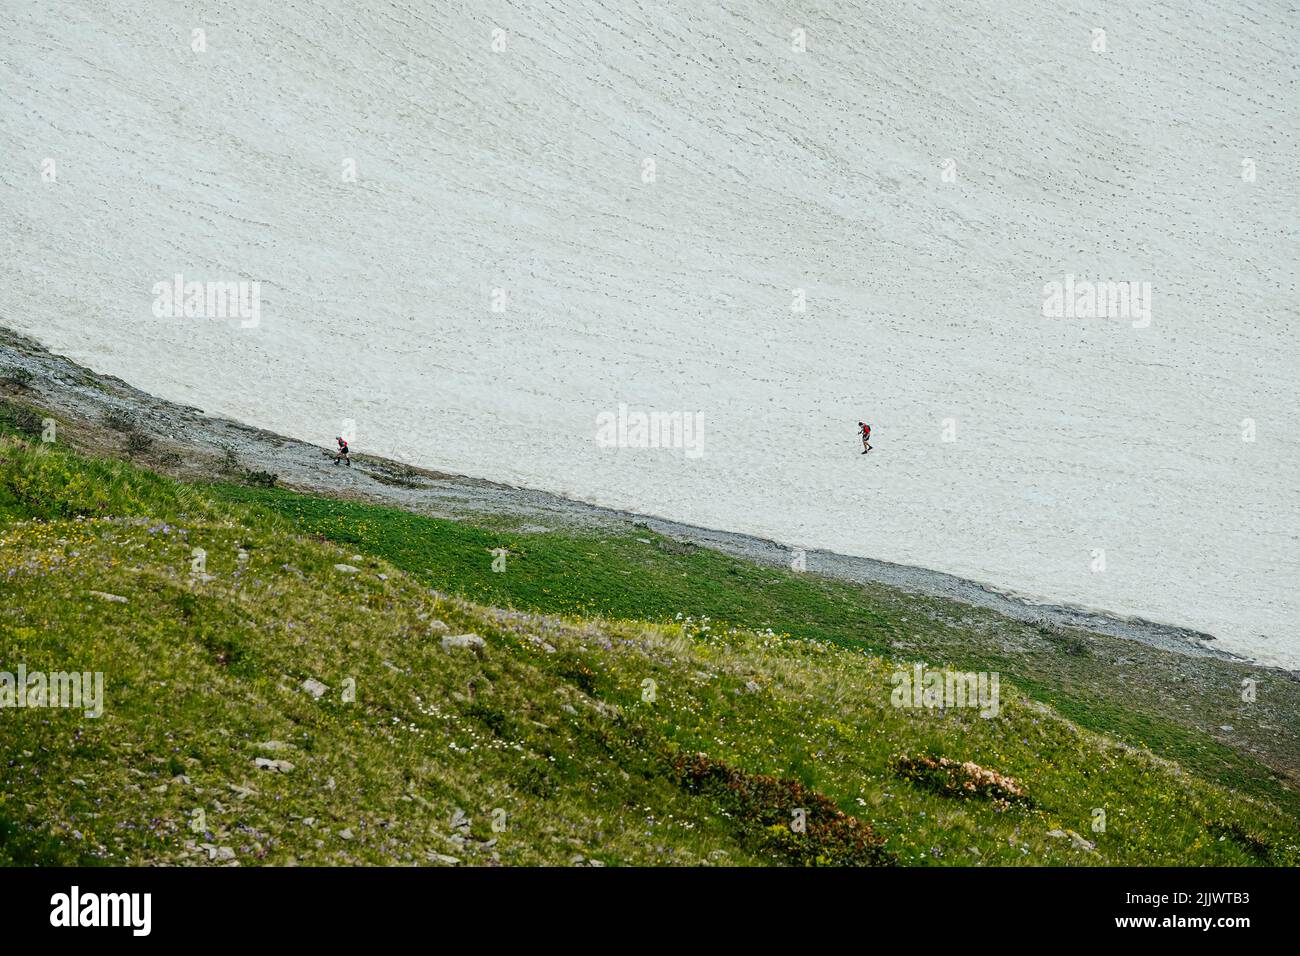 woman and man athletes run on snowy slope during marathon Stock Photo